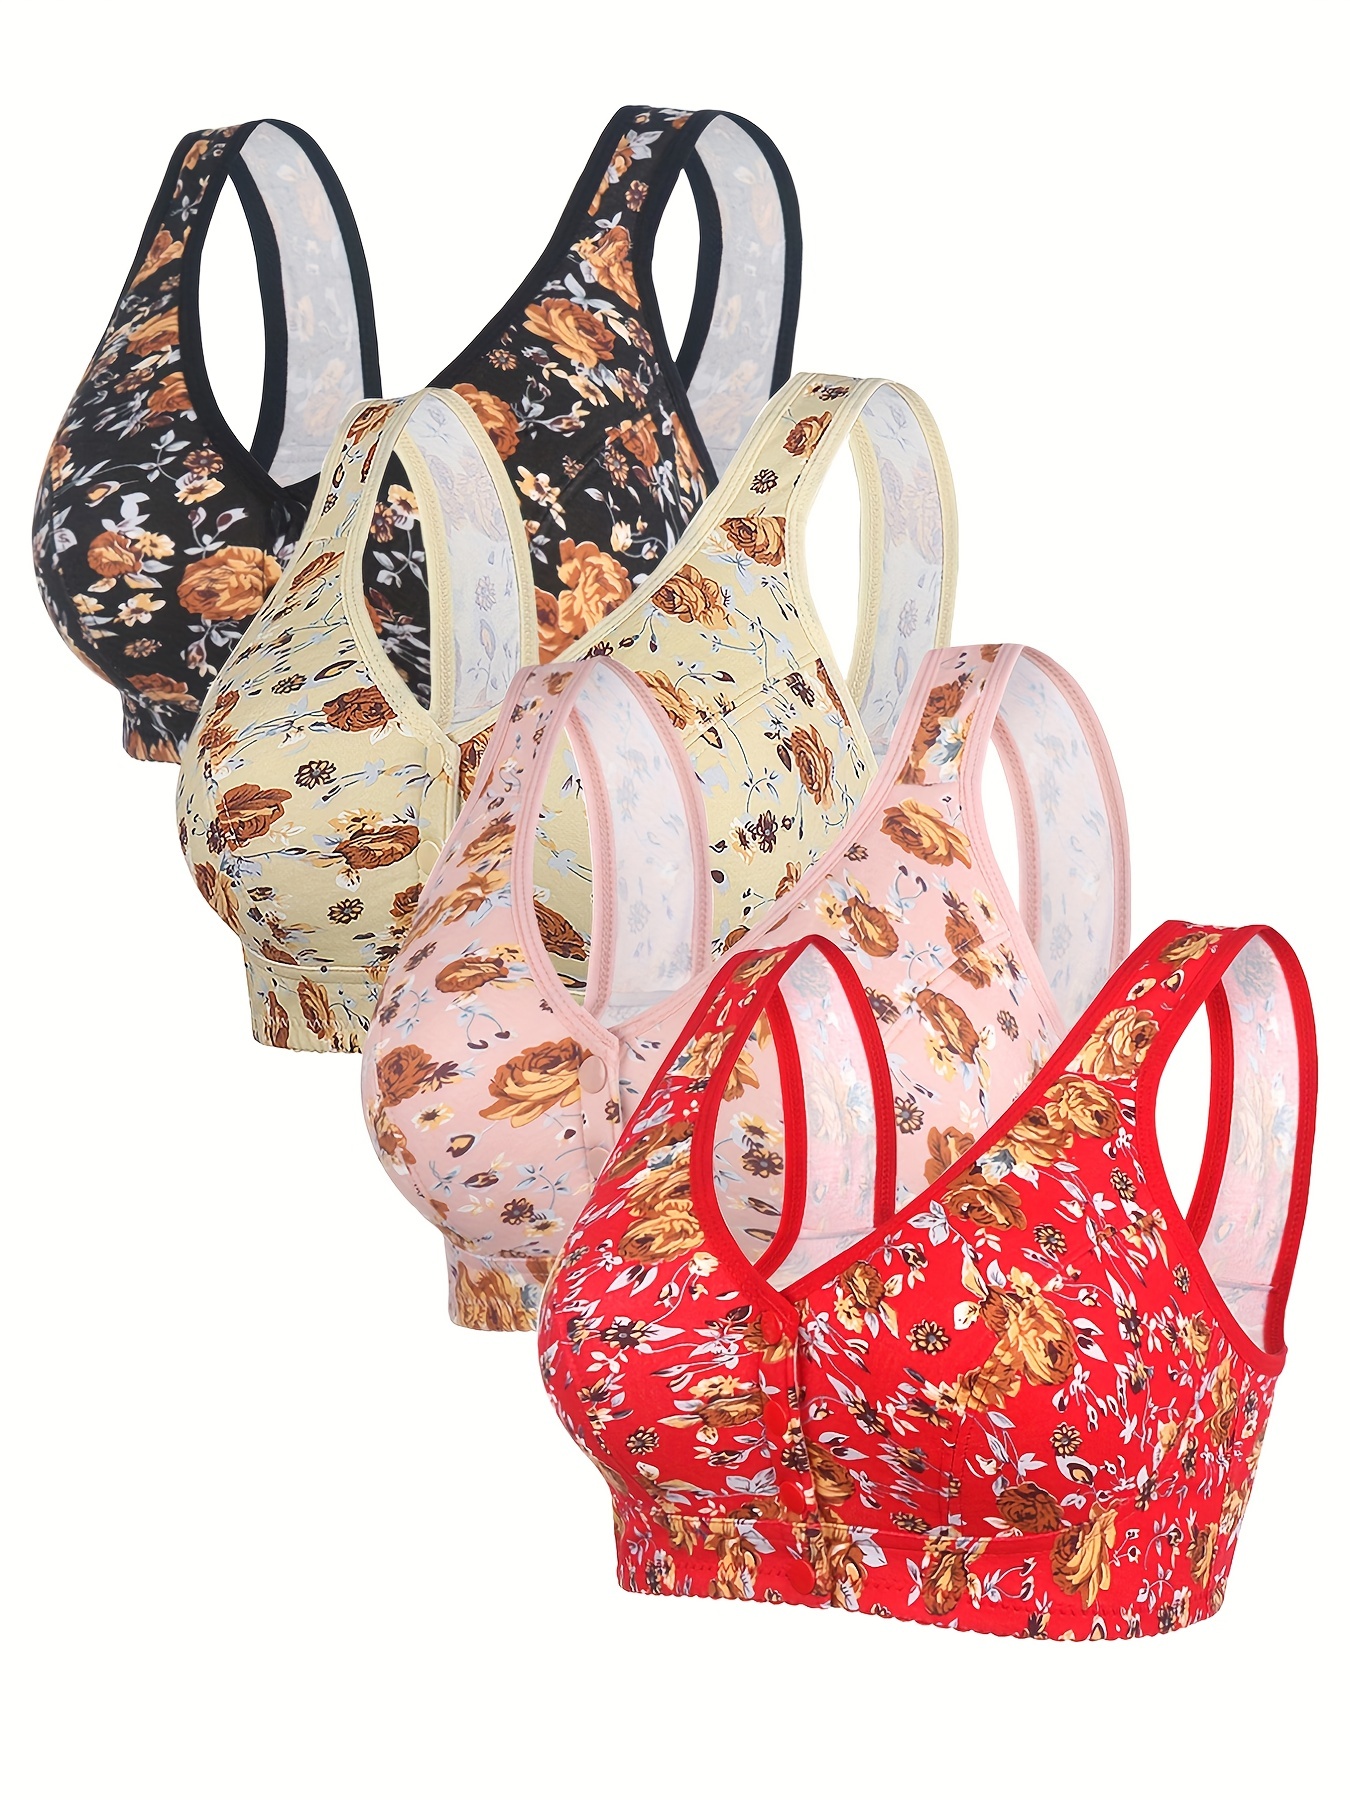 3pcs Leopard Wireless Bras, Comfy & Seamless Cut Out Breathable Bra,  Women's Lingerie & Underwear